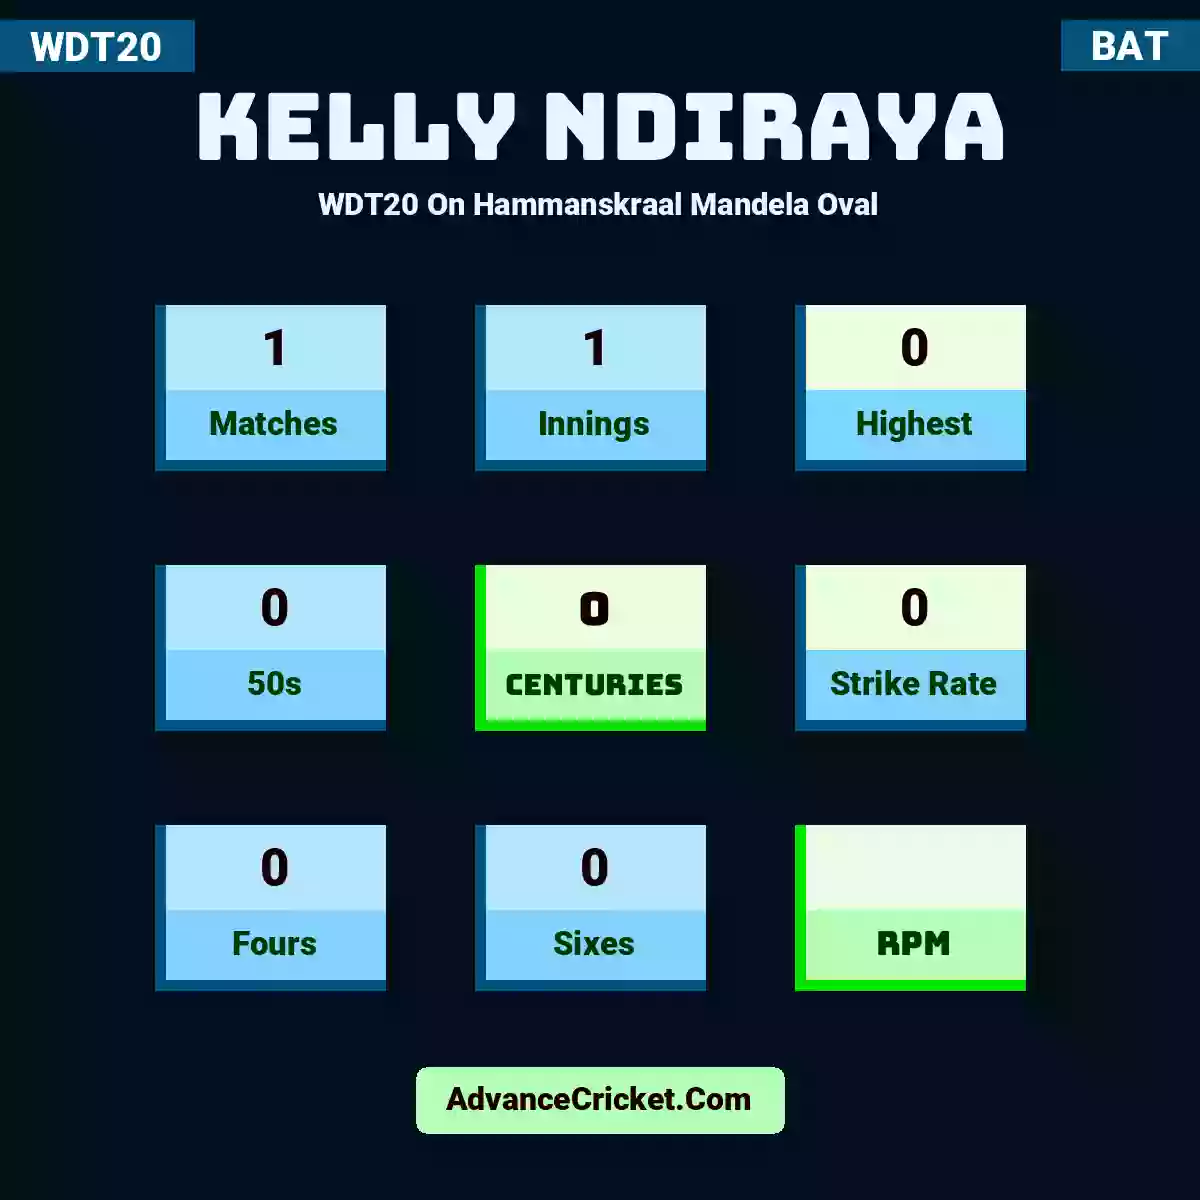 Kelly Ndiraya WDT20  On Hammanskraal Mandela Oval, Kelly Ndiraya played 1 matches, scored 0 runs as highest, 0 half-centuries, and 0 centuries, with a strike rate of 0. K.Ndiraya hit 0 fours and 0 sixes.